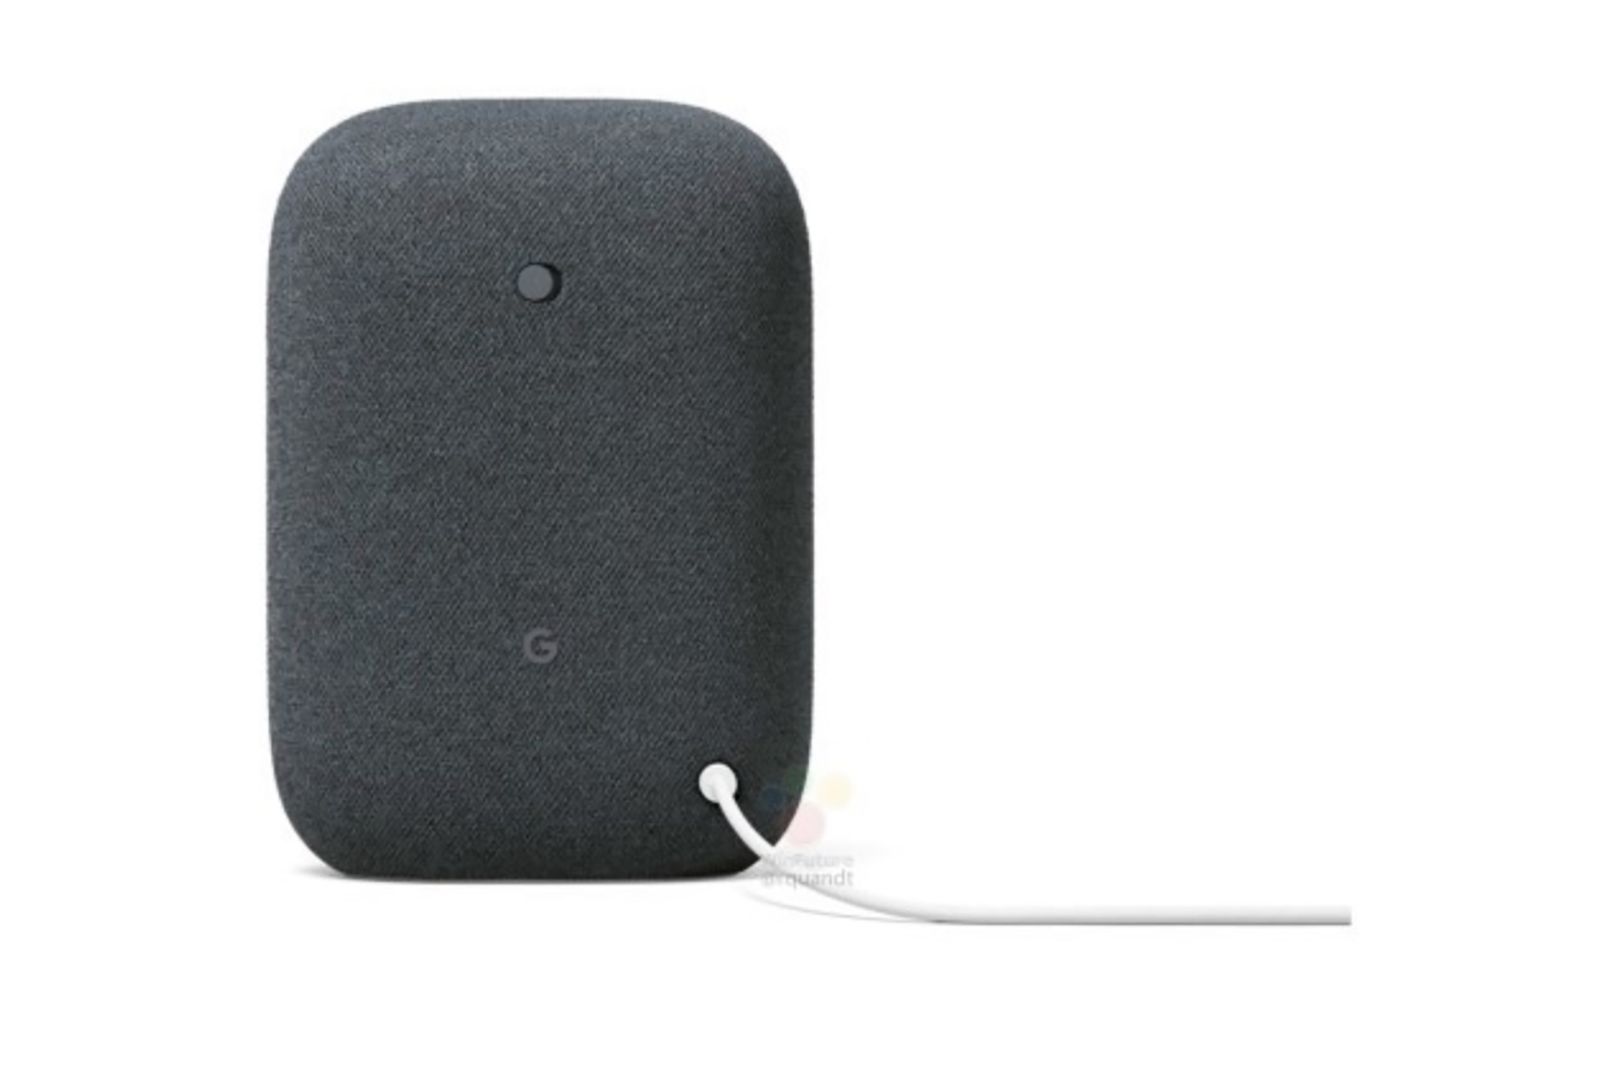 Google's next smart speaker, the 100 Nest Audio, pictured in new leak photo 2